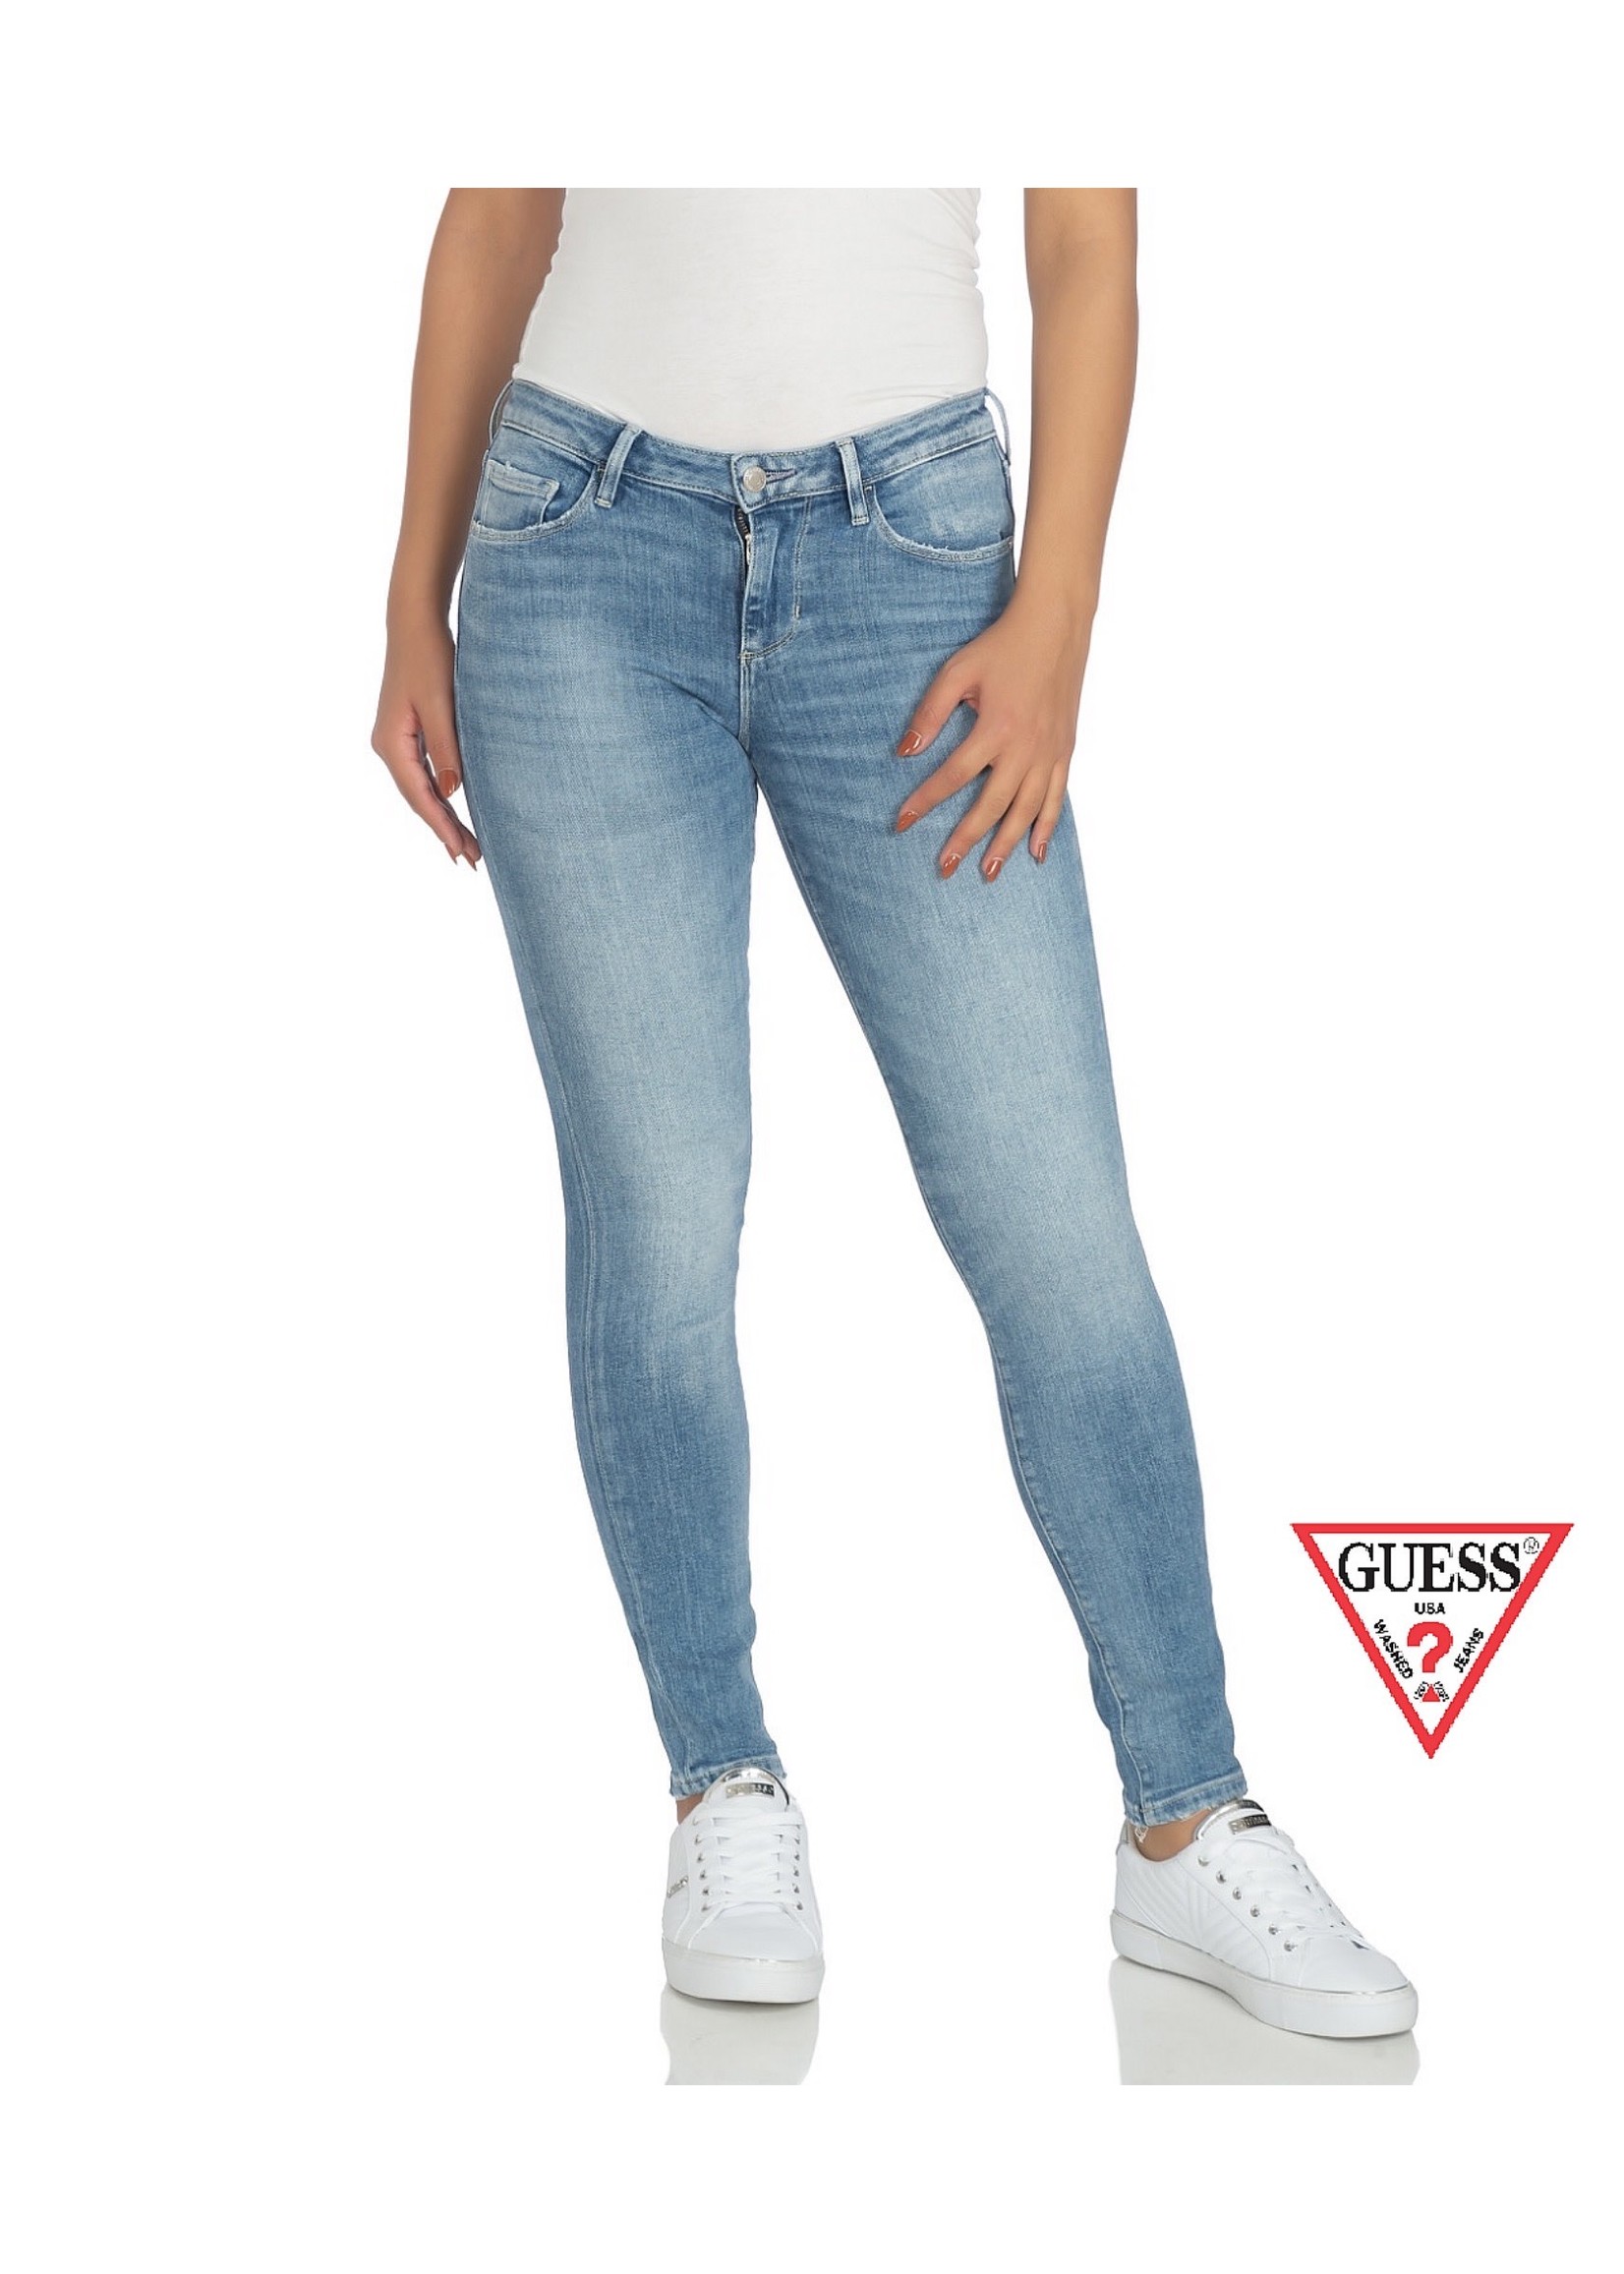 GUESS (FEMME) Jeans Guess W1YA99D4